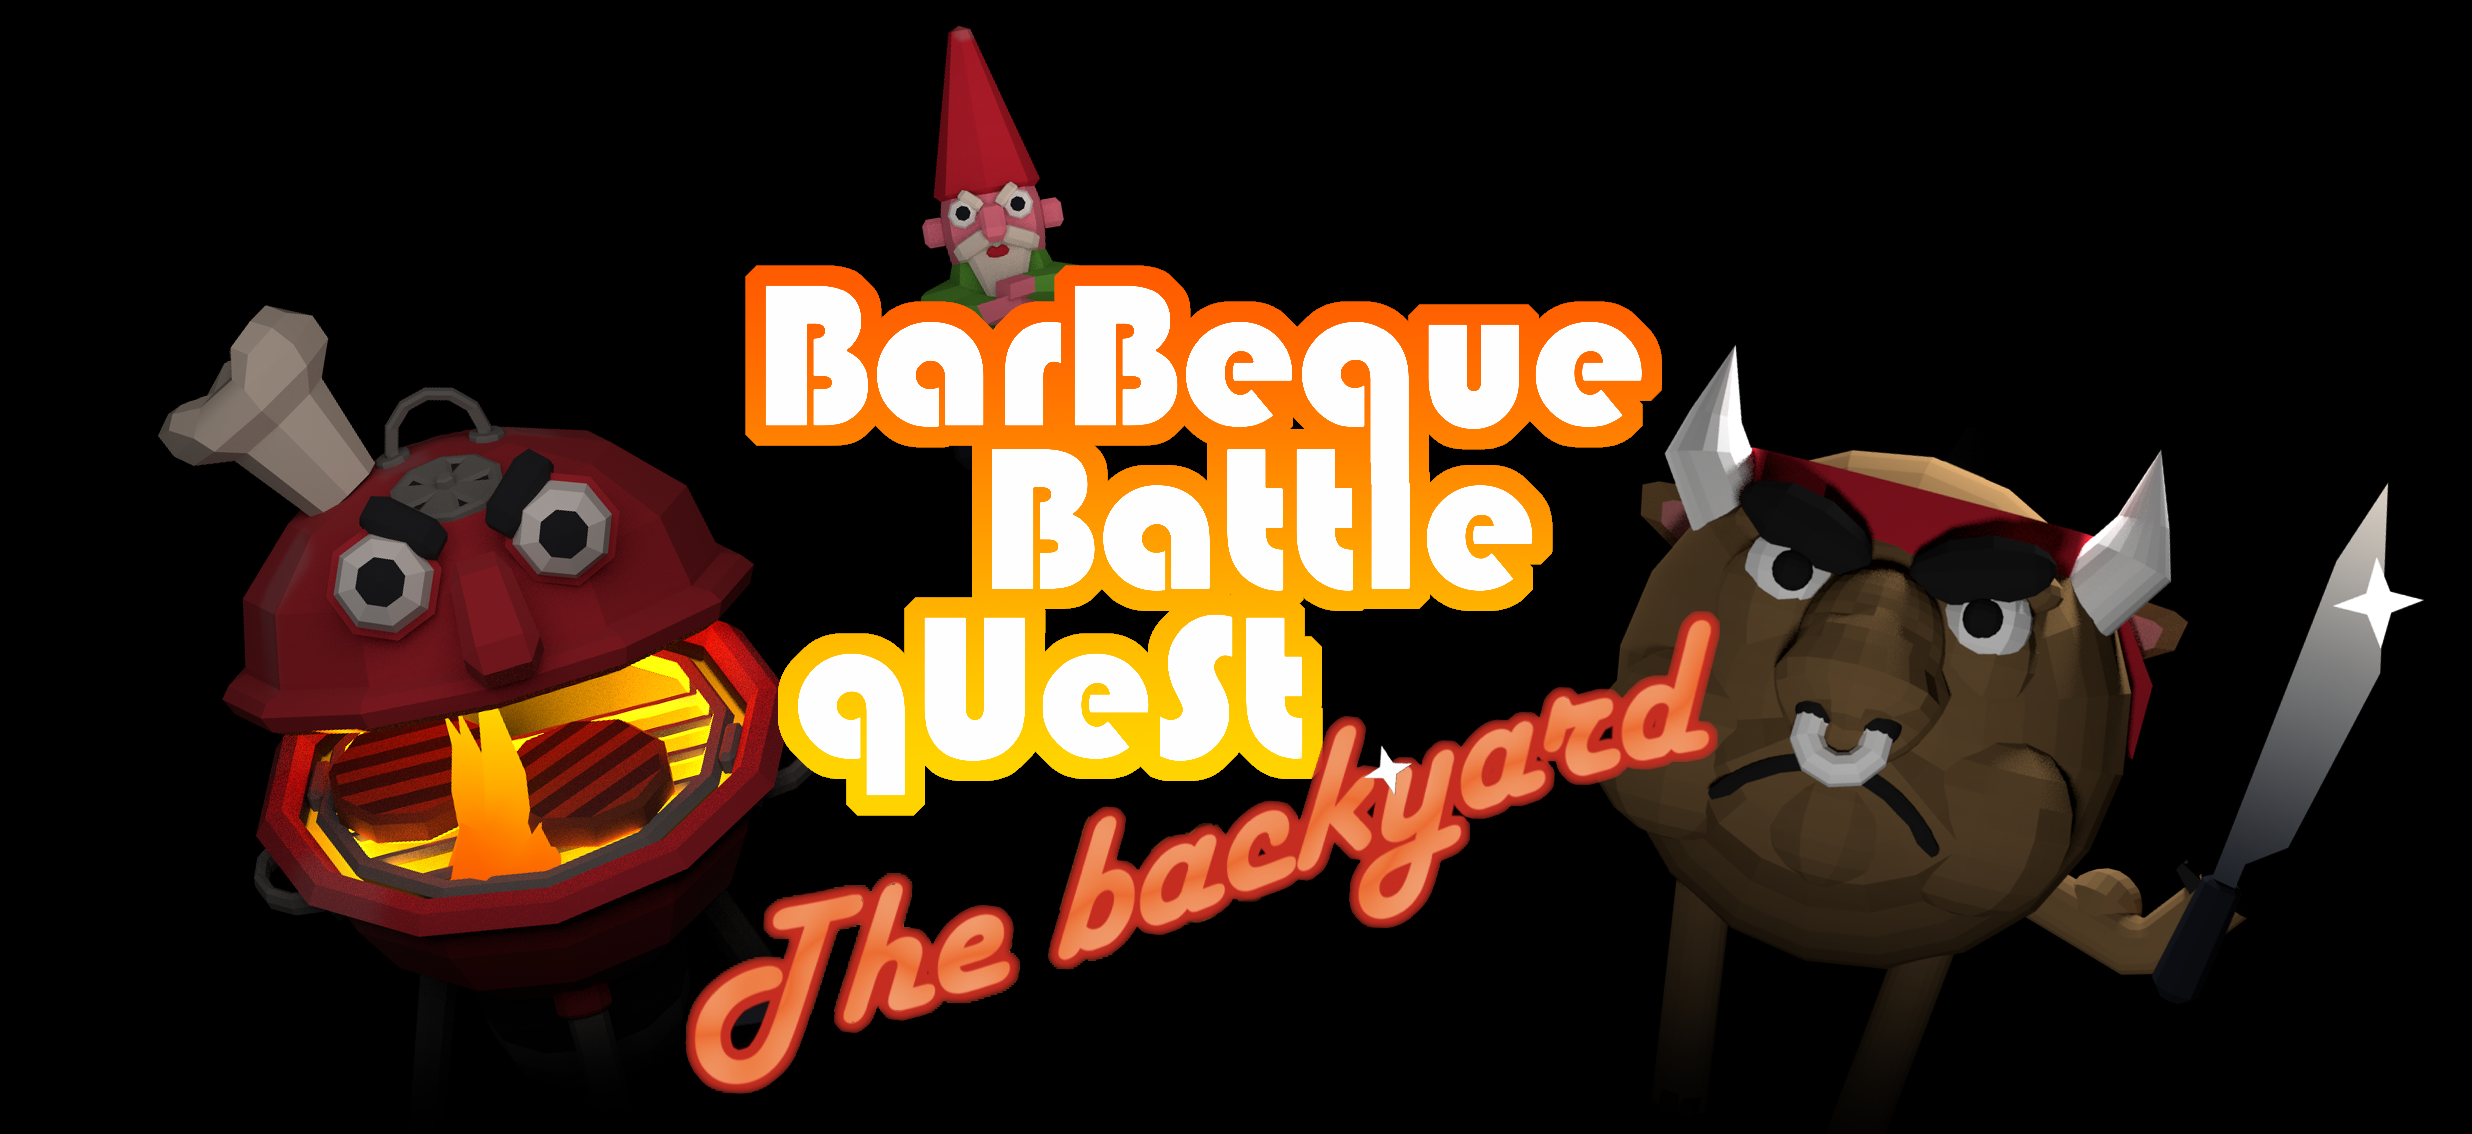 Barbeque Battle Quest